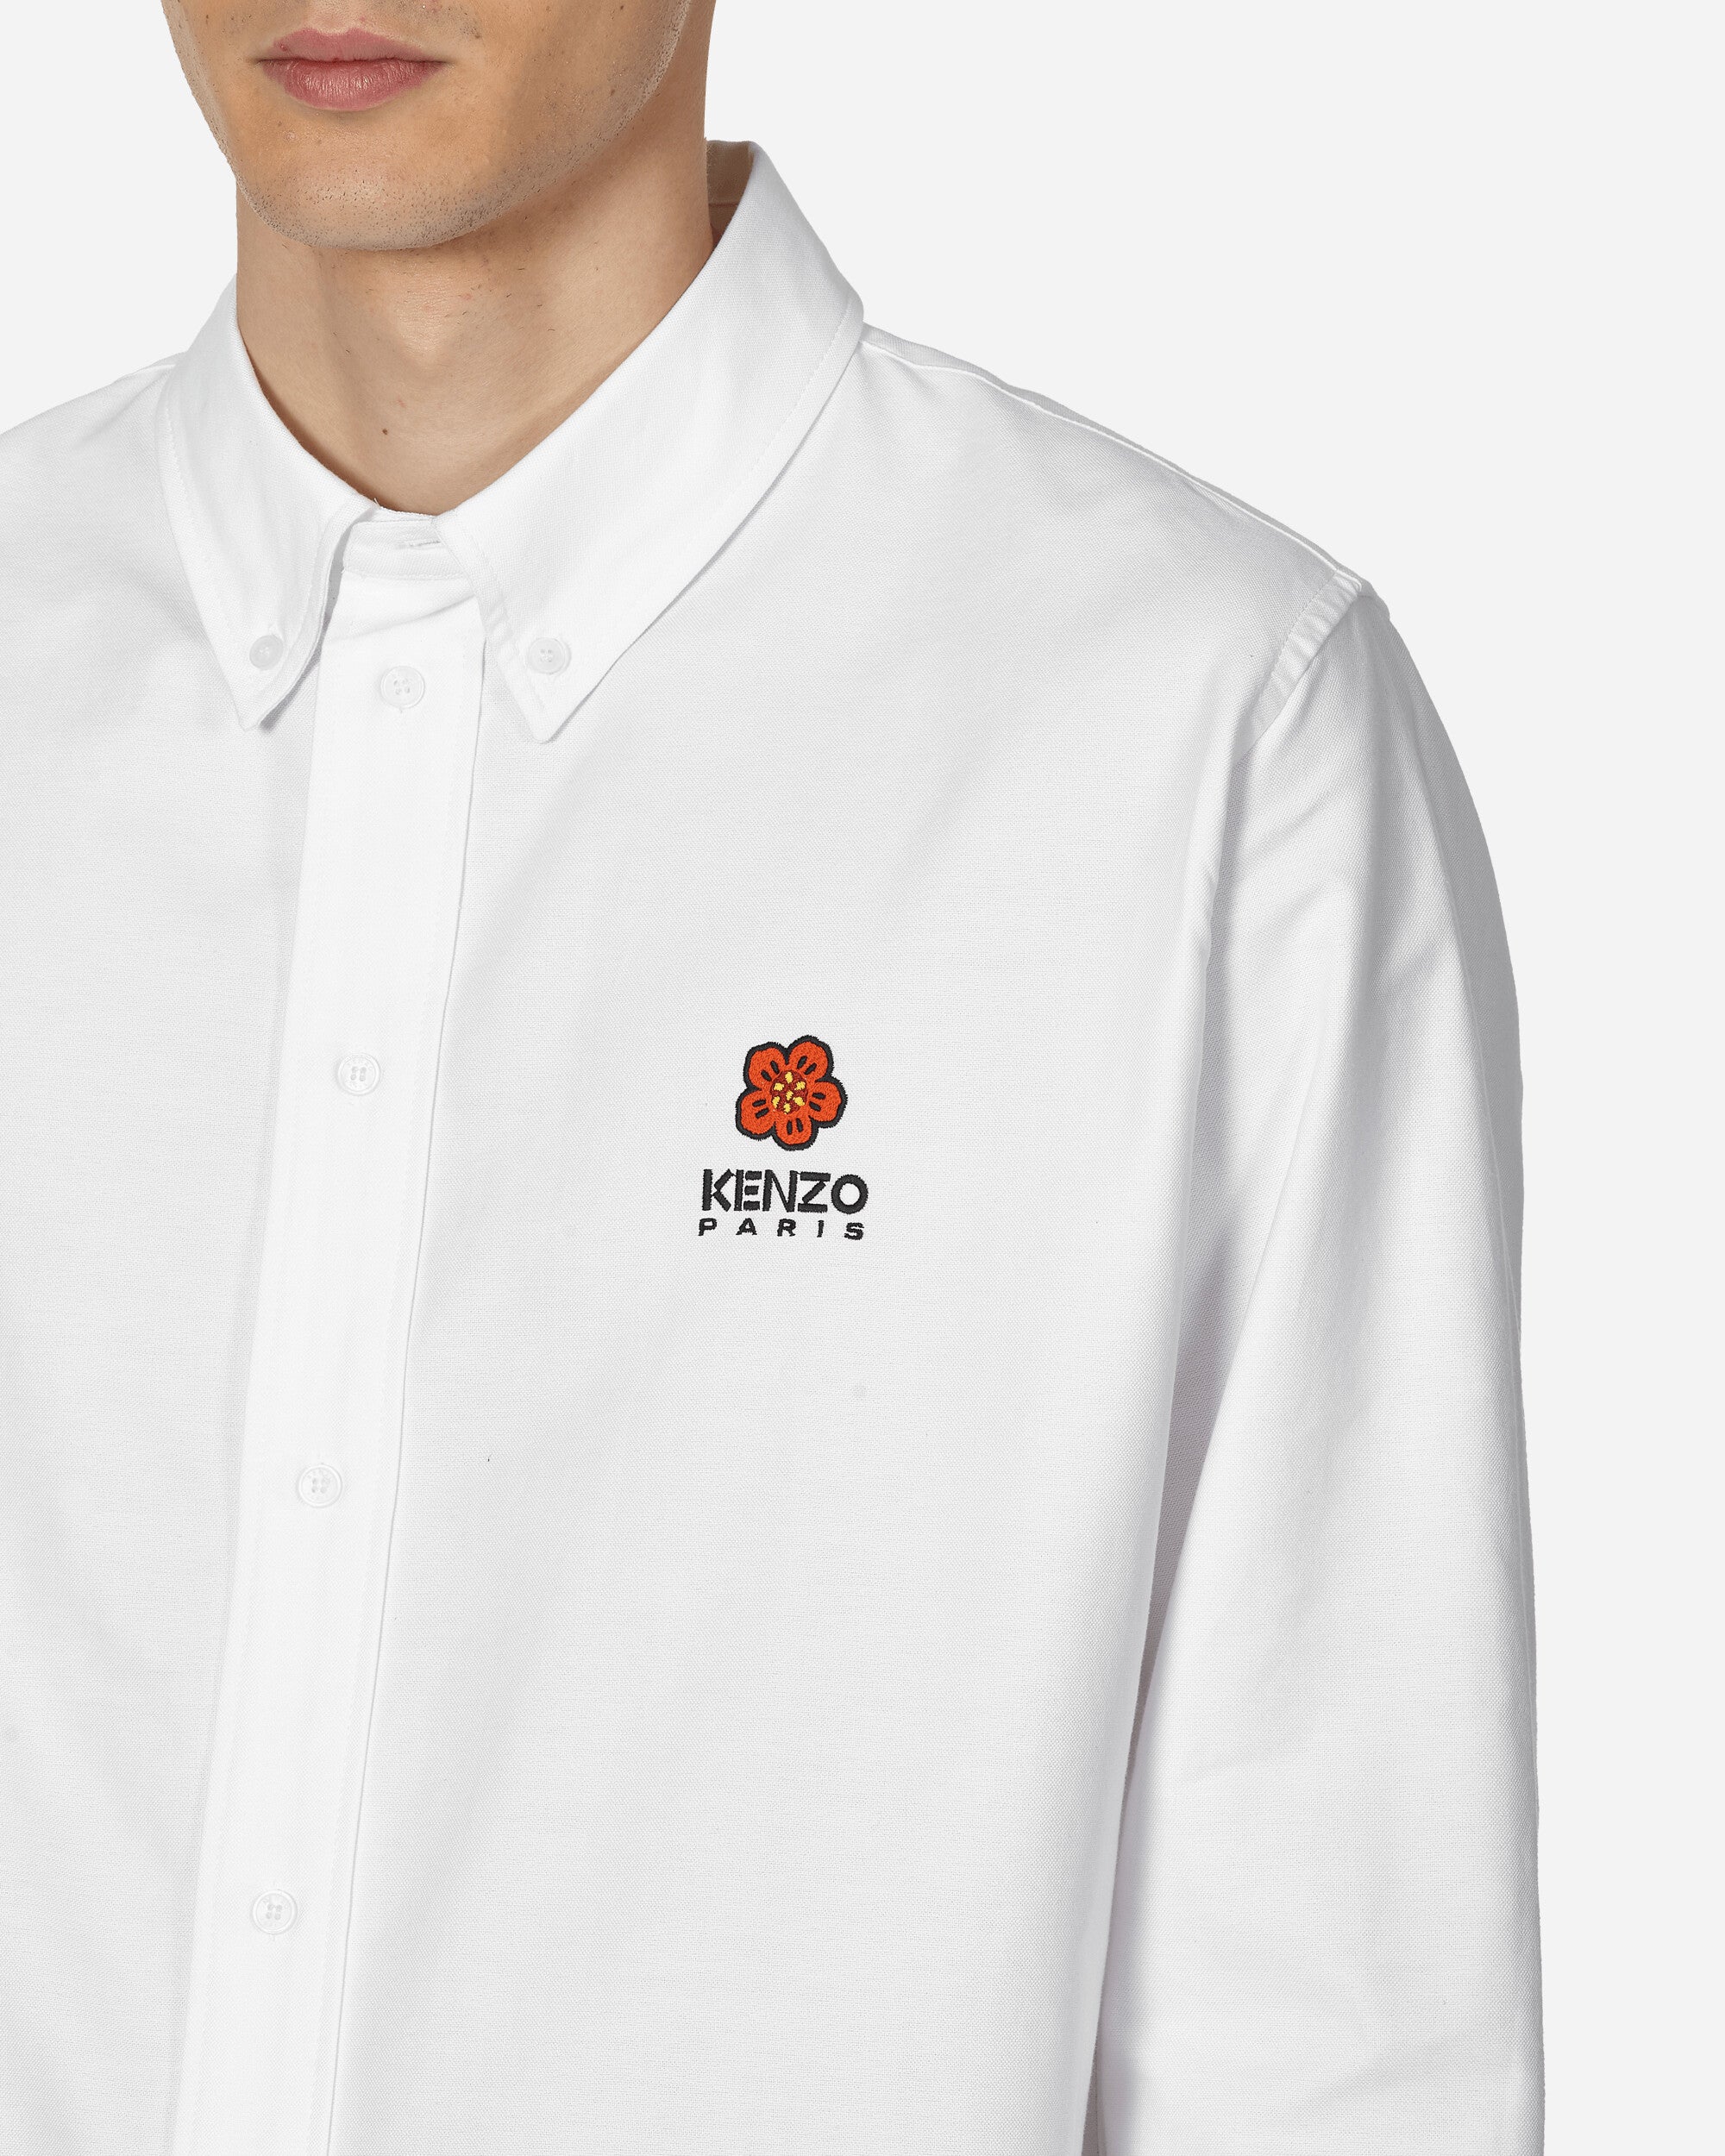 KENZO Paris Boke Crest Oxford Shirt White Shirts Longsleeve Shirt FD55CH4109LO 01